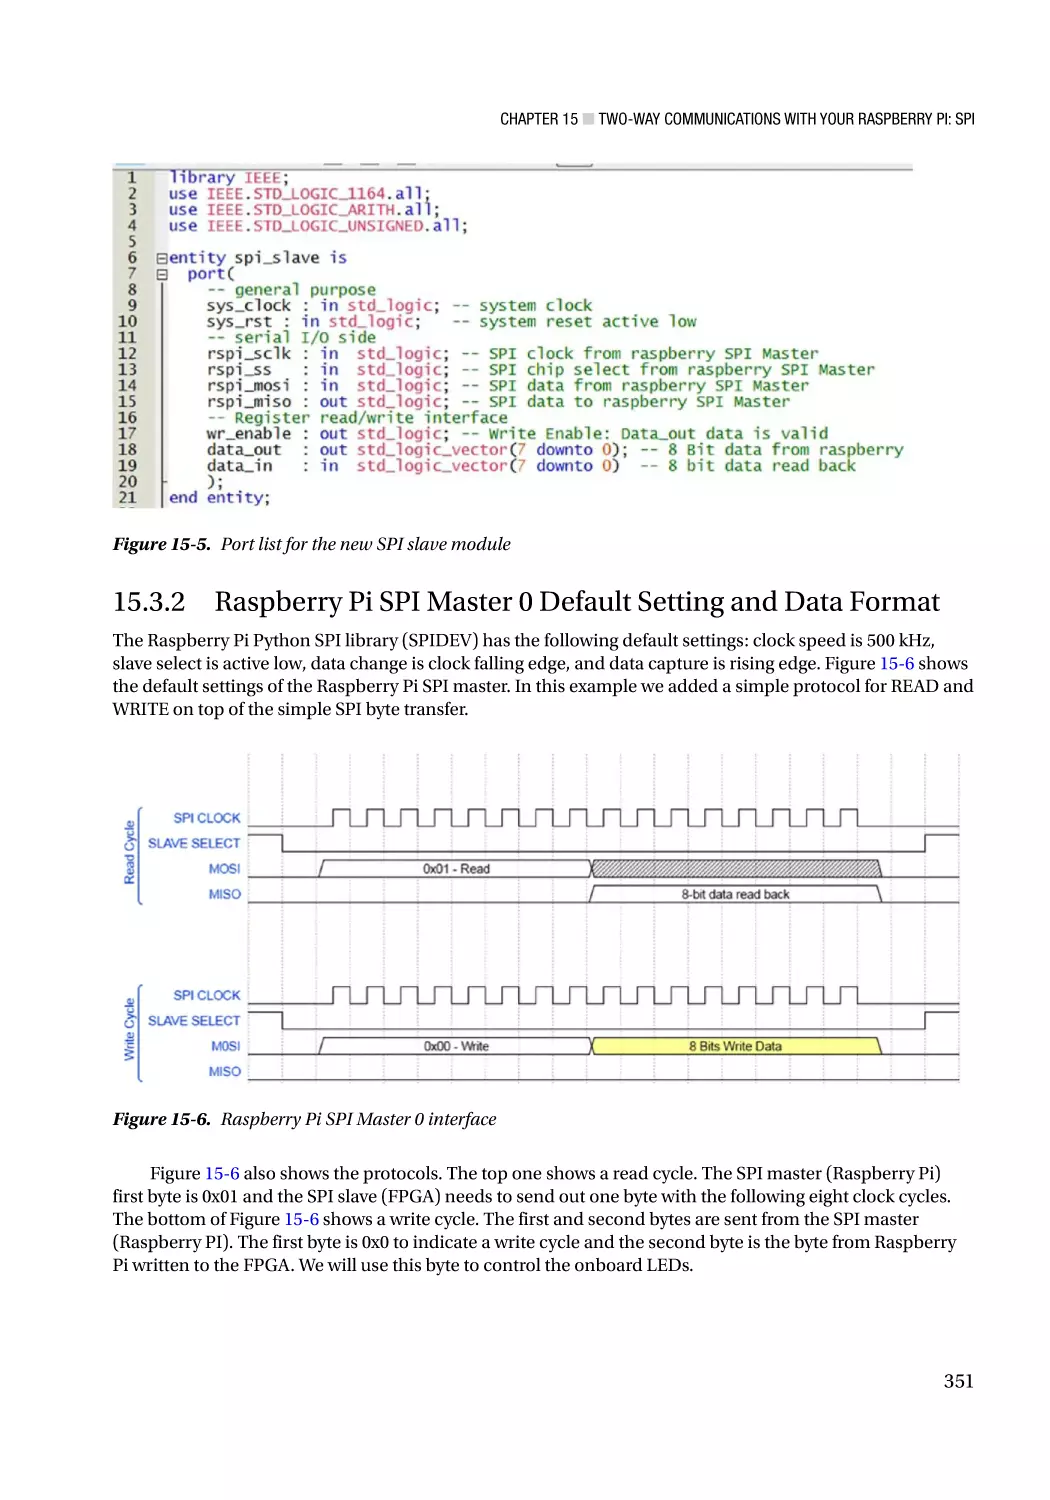 15.3.2 Raspberry Pi SPI Master 0 Default Setting and Data Format